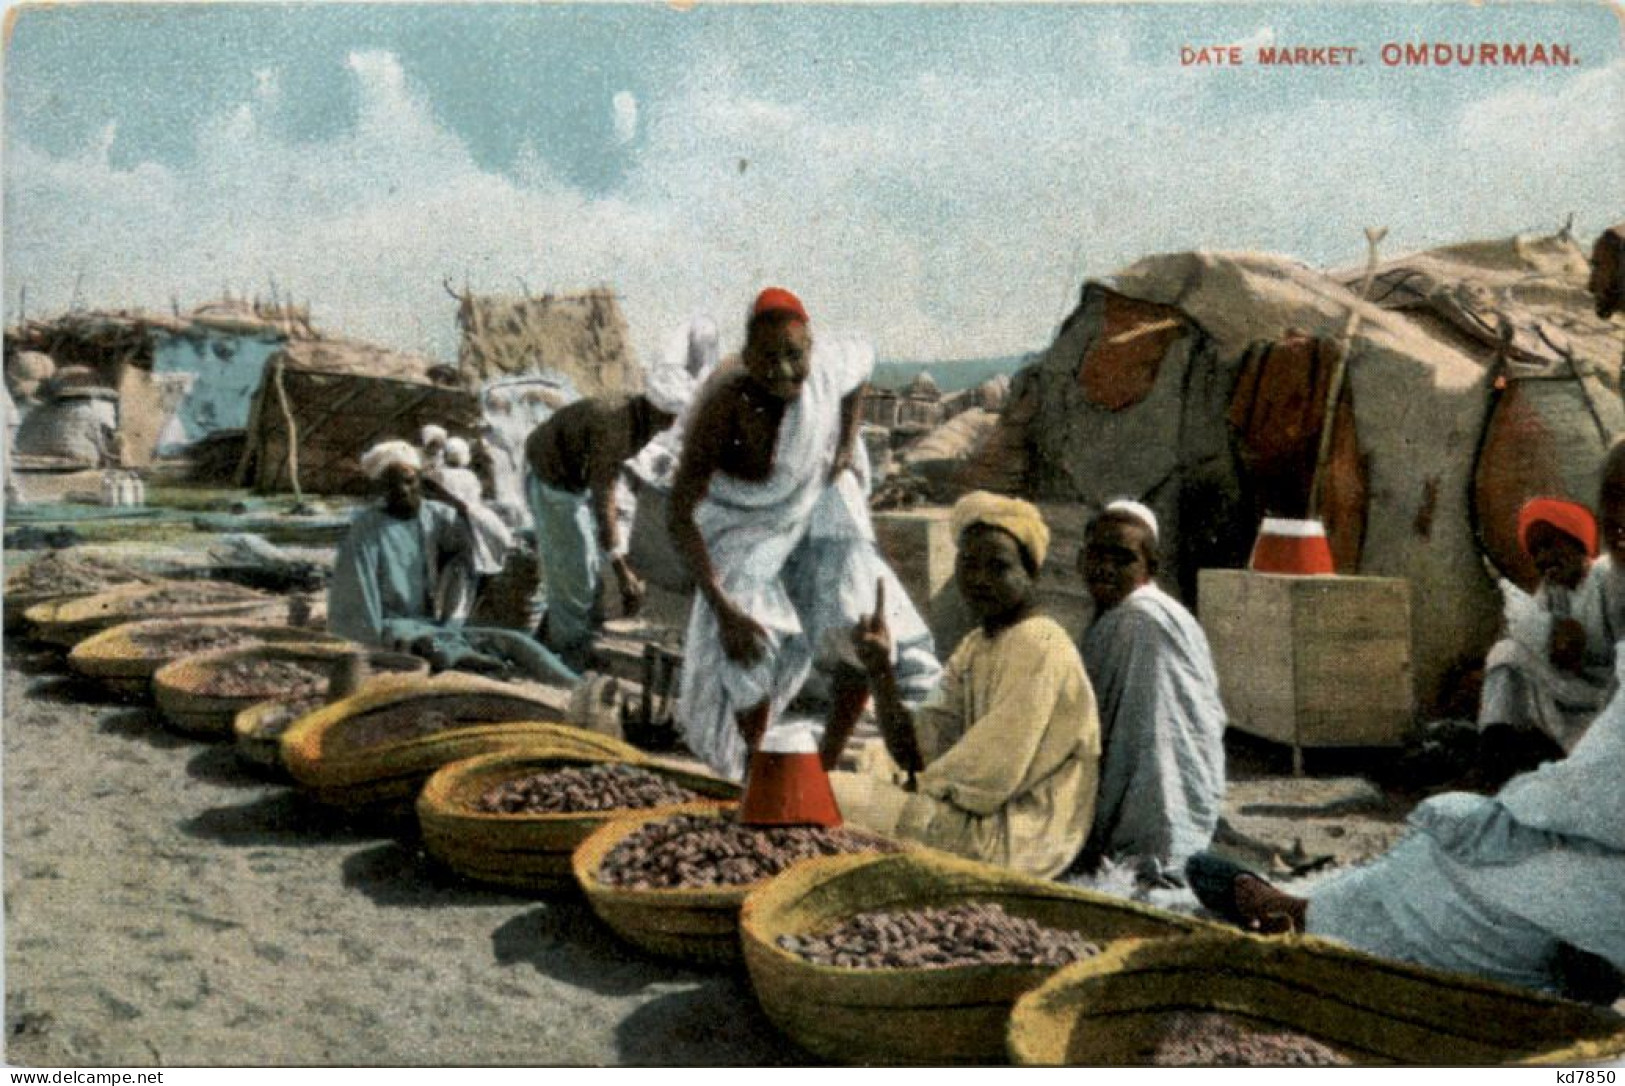 Sudan - 'Omdurman - Date Market - Soudan